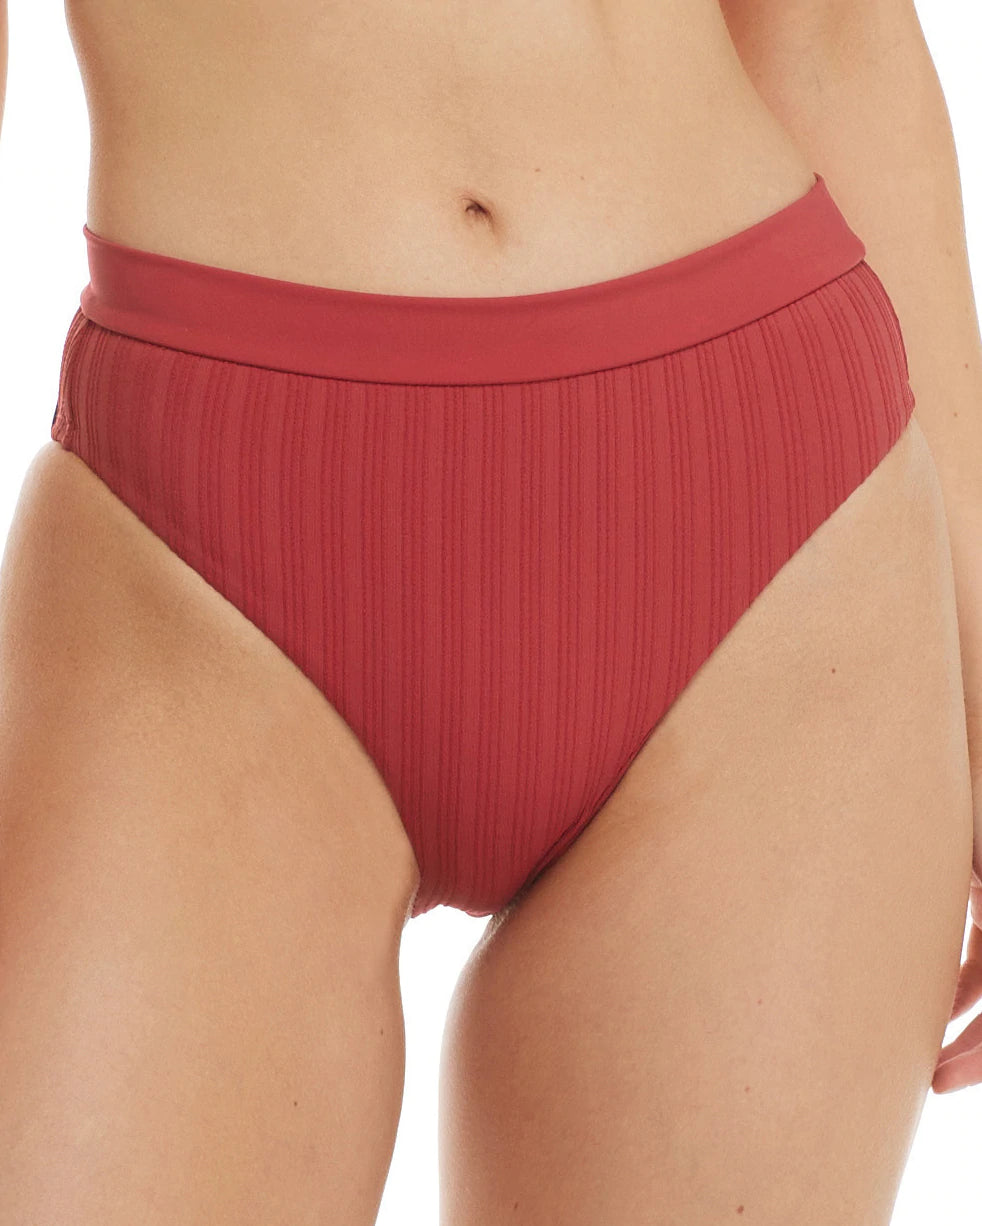 Body Glove Senses Marlee High-Waist Bikini Bottom